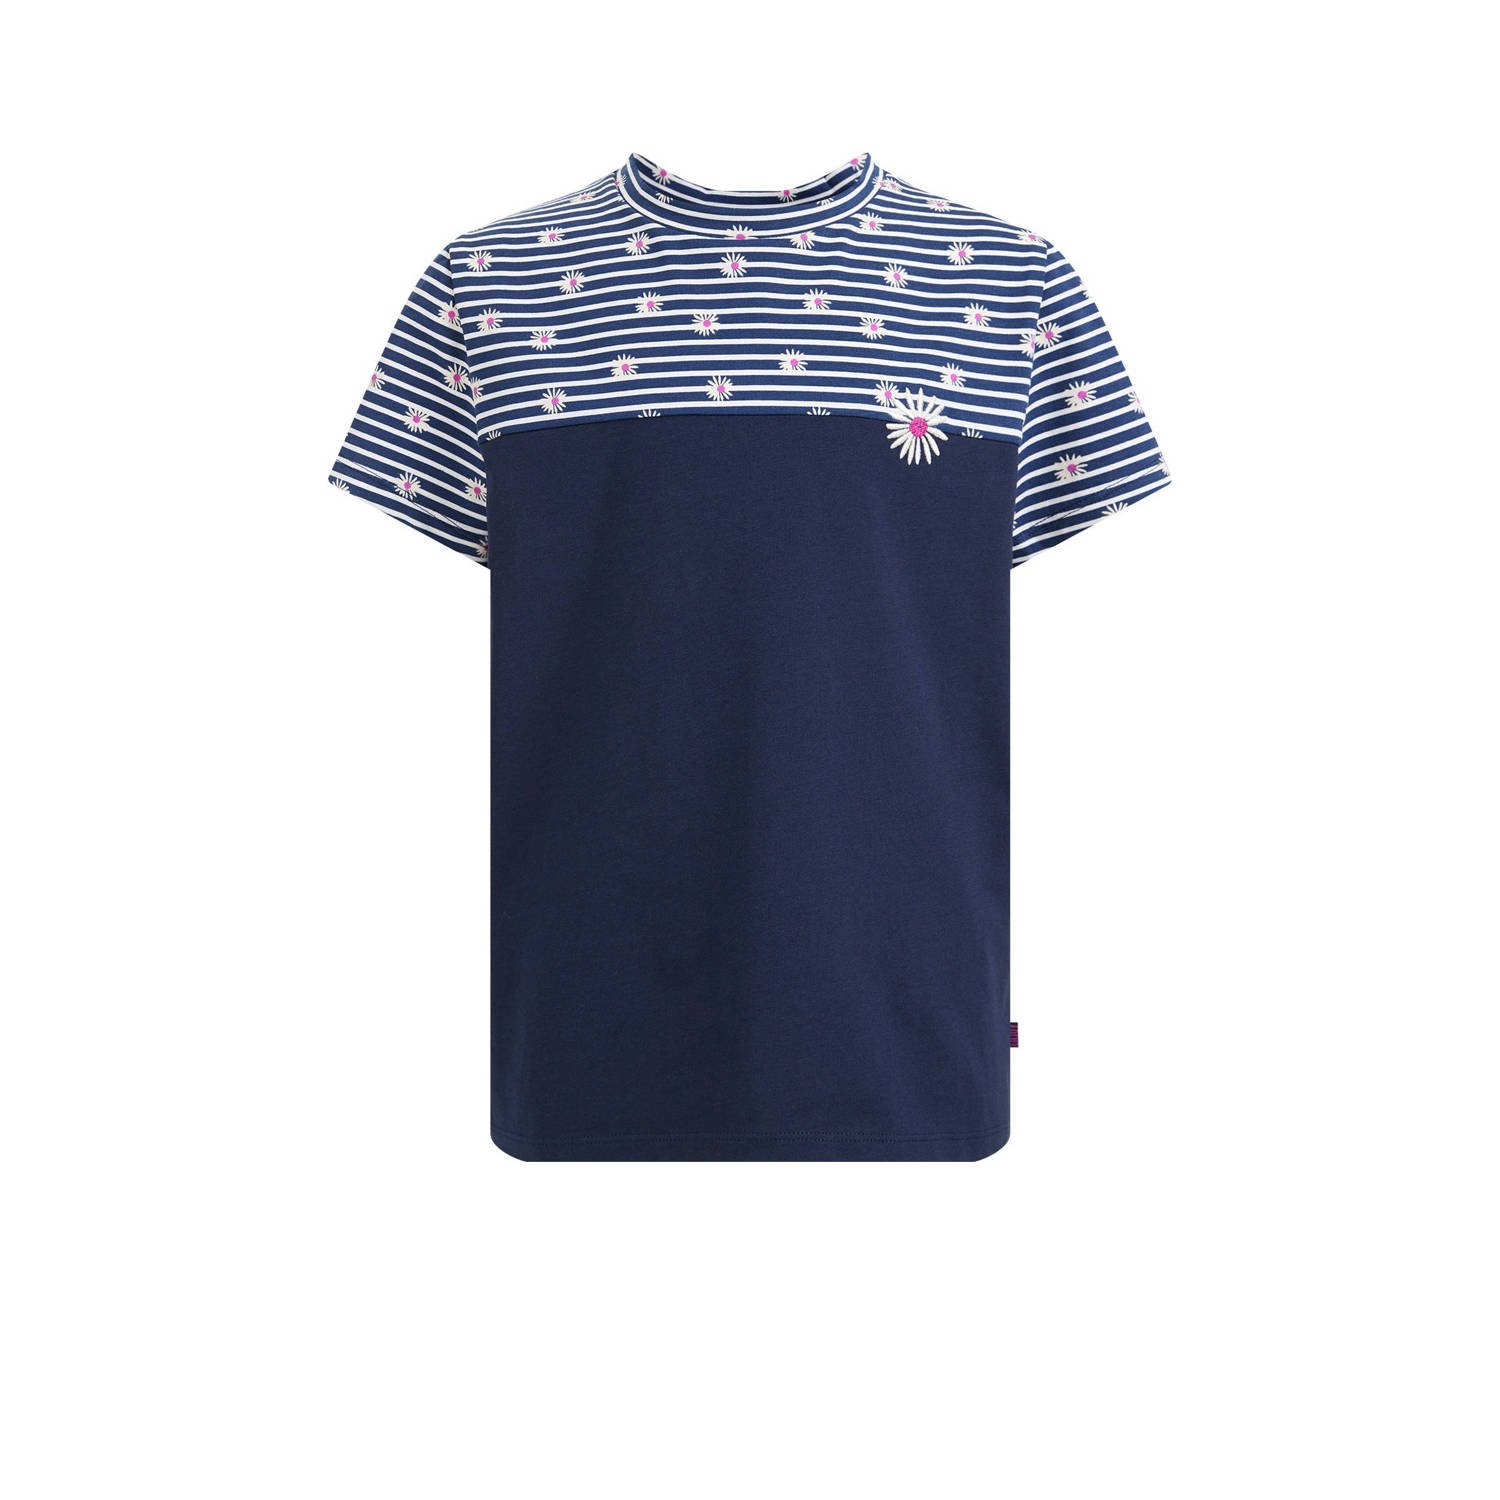 WE Fashion T-shirt met all over print donkerblauw Meisjes Stretchkatoen Ronde hals 110 116